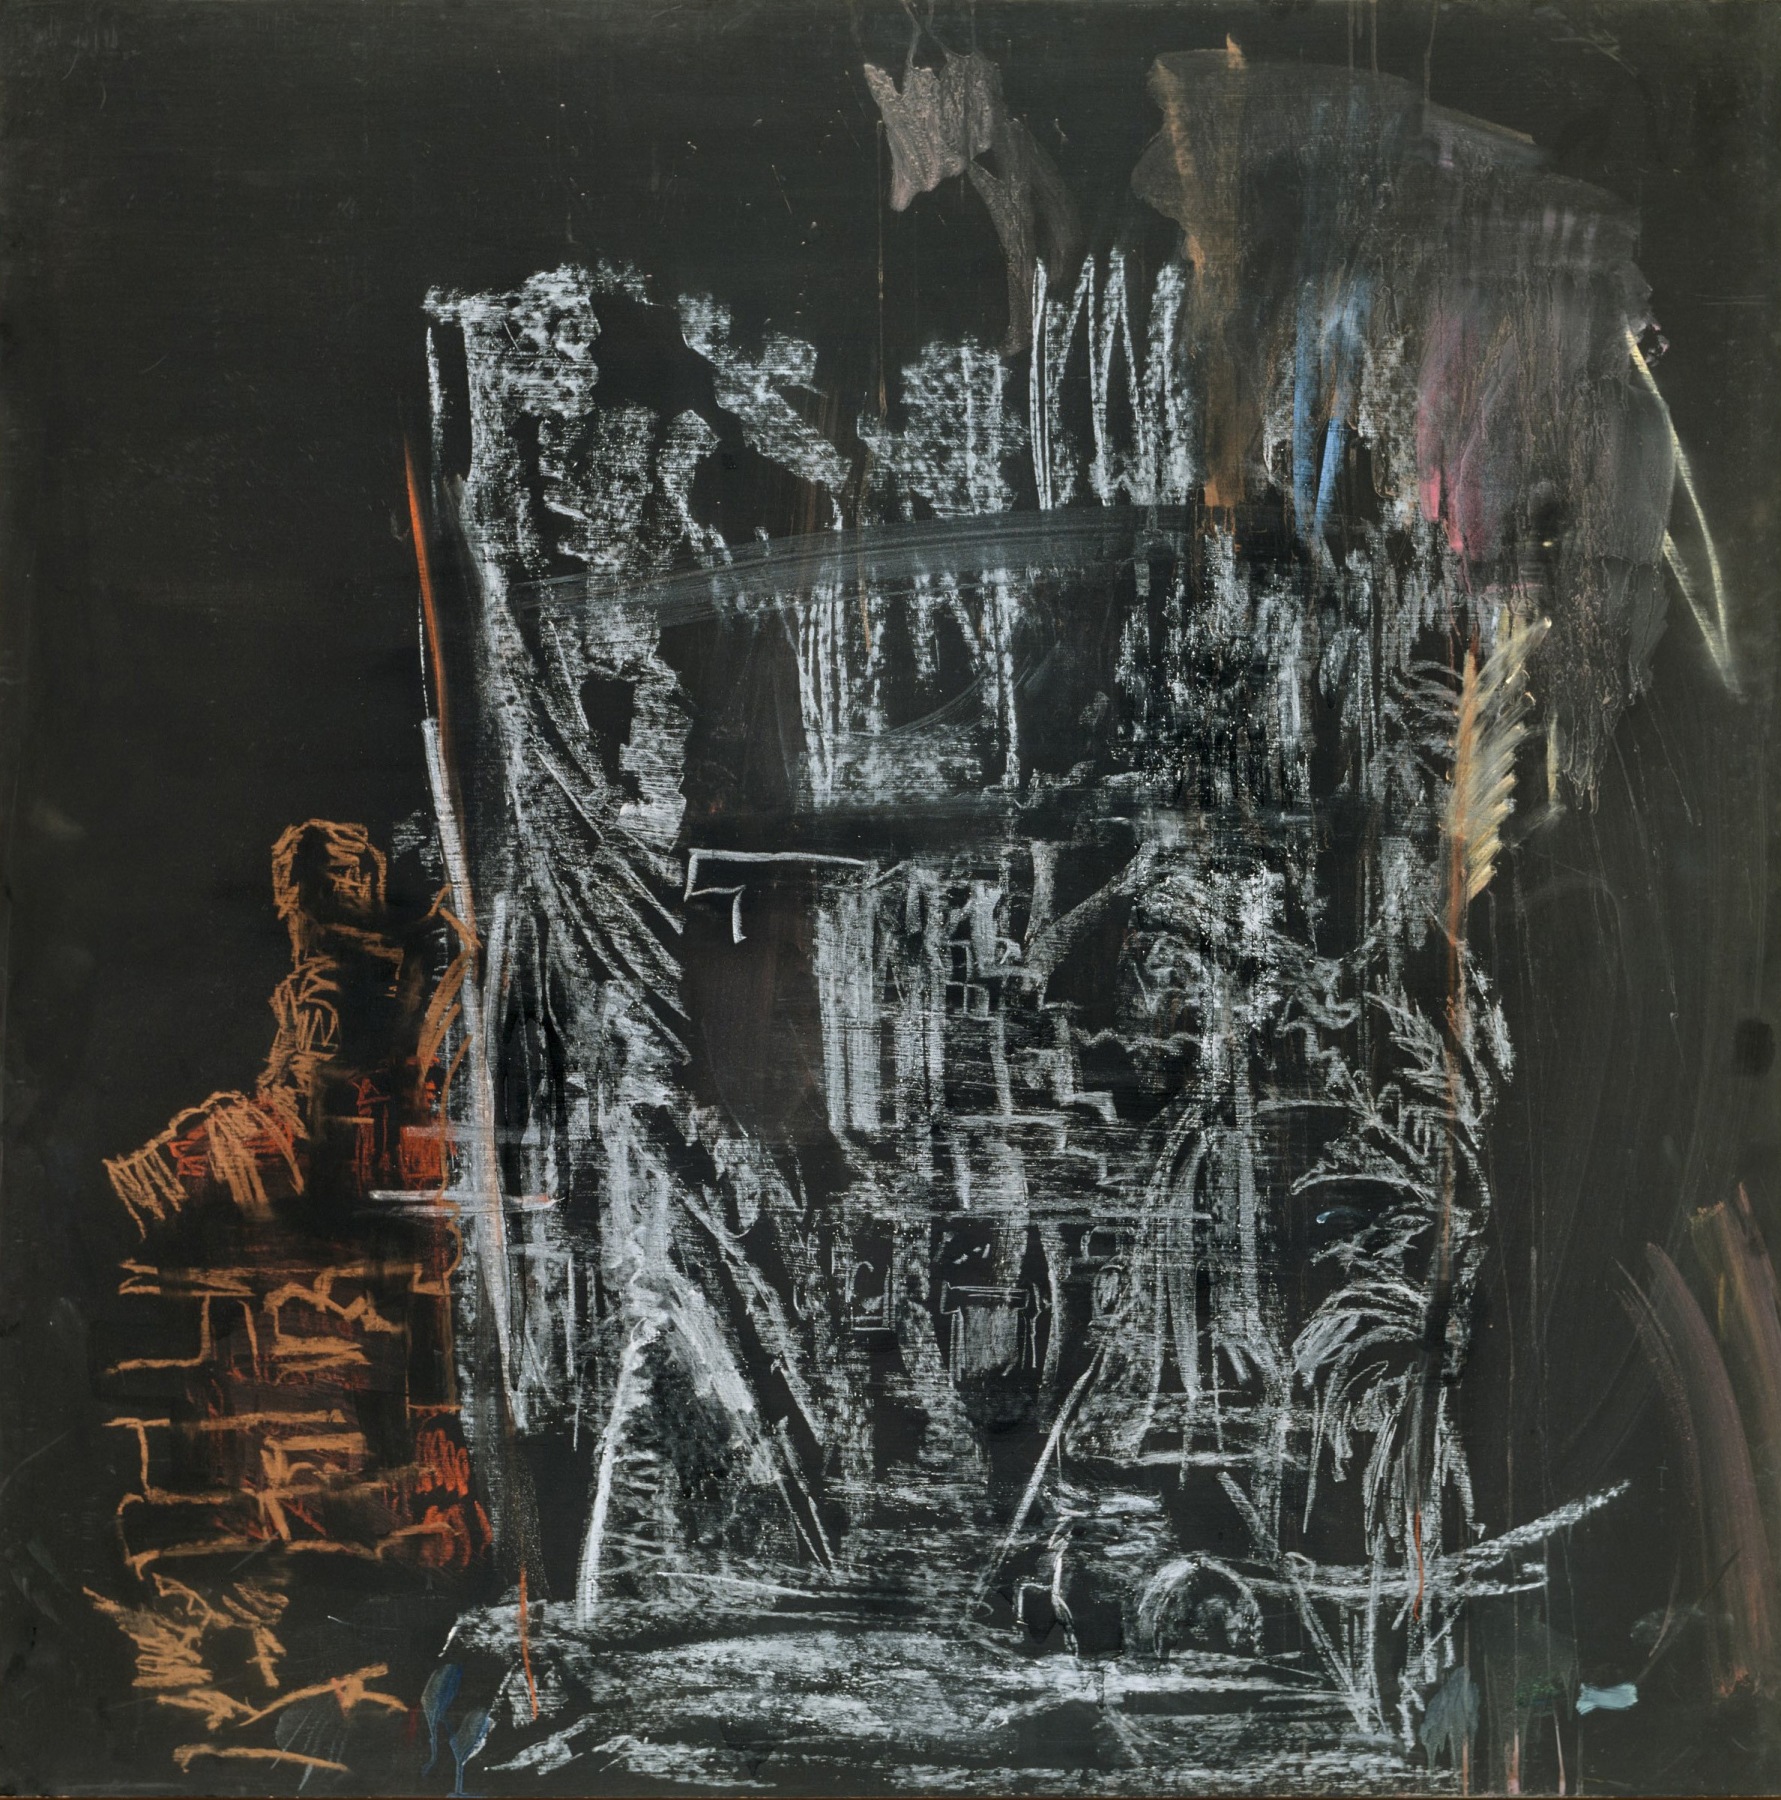 Per Kirkeby

&amp;ldquo;Kopf&amp;rdquo;, 1977

Chalk, blackboard paint on masonite

48 x 48 inches

122 x 122 cm

PK 7

$175,000